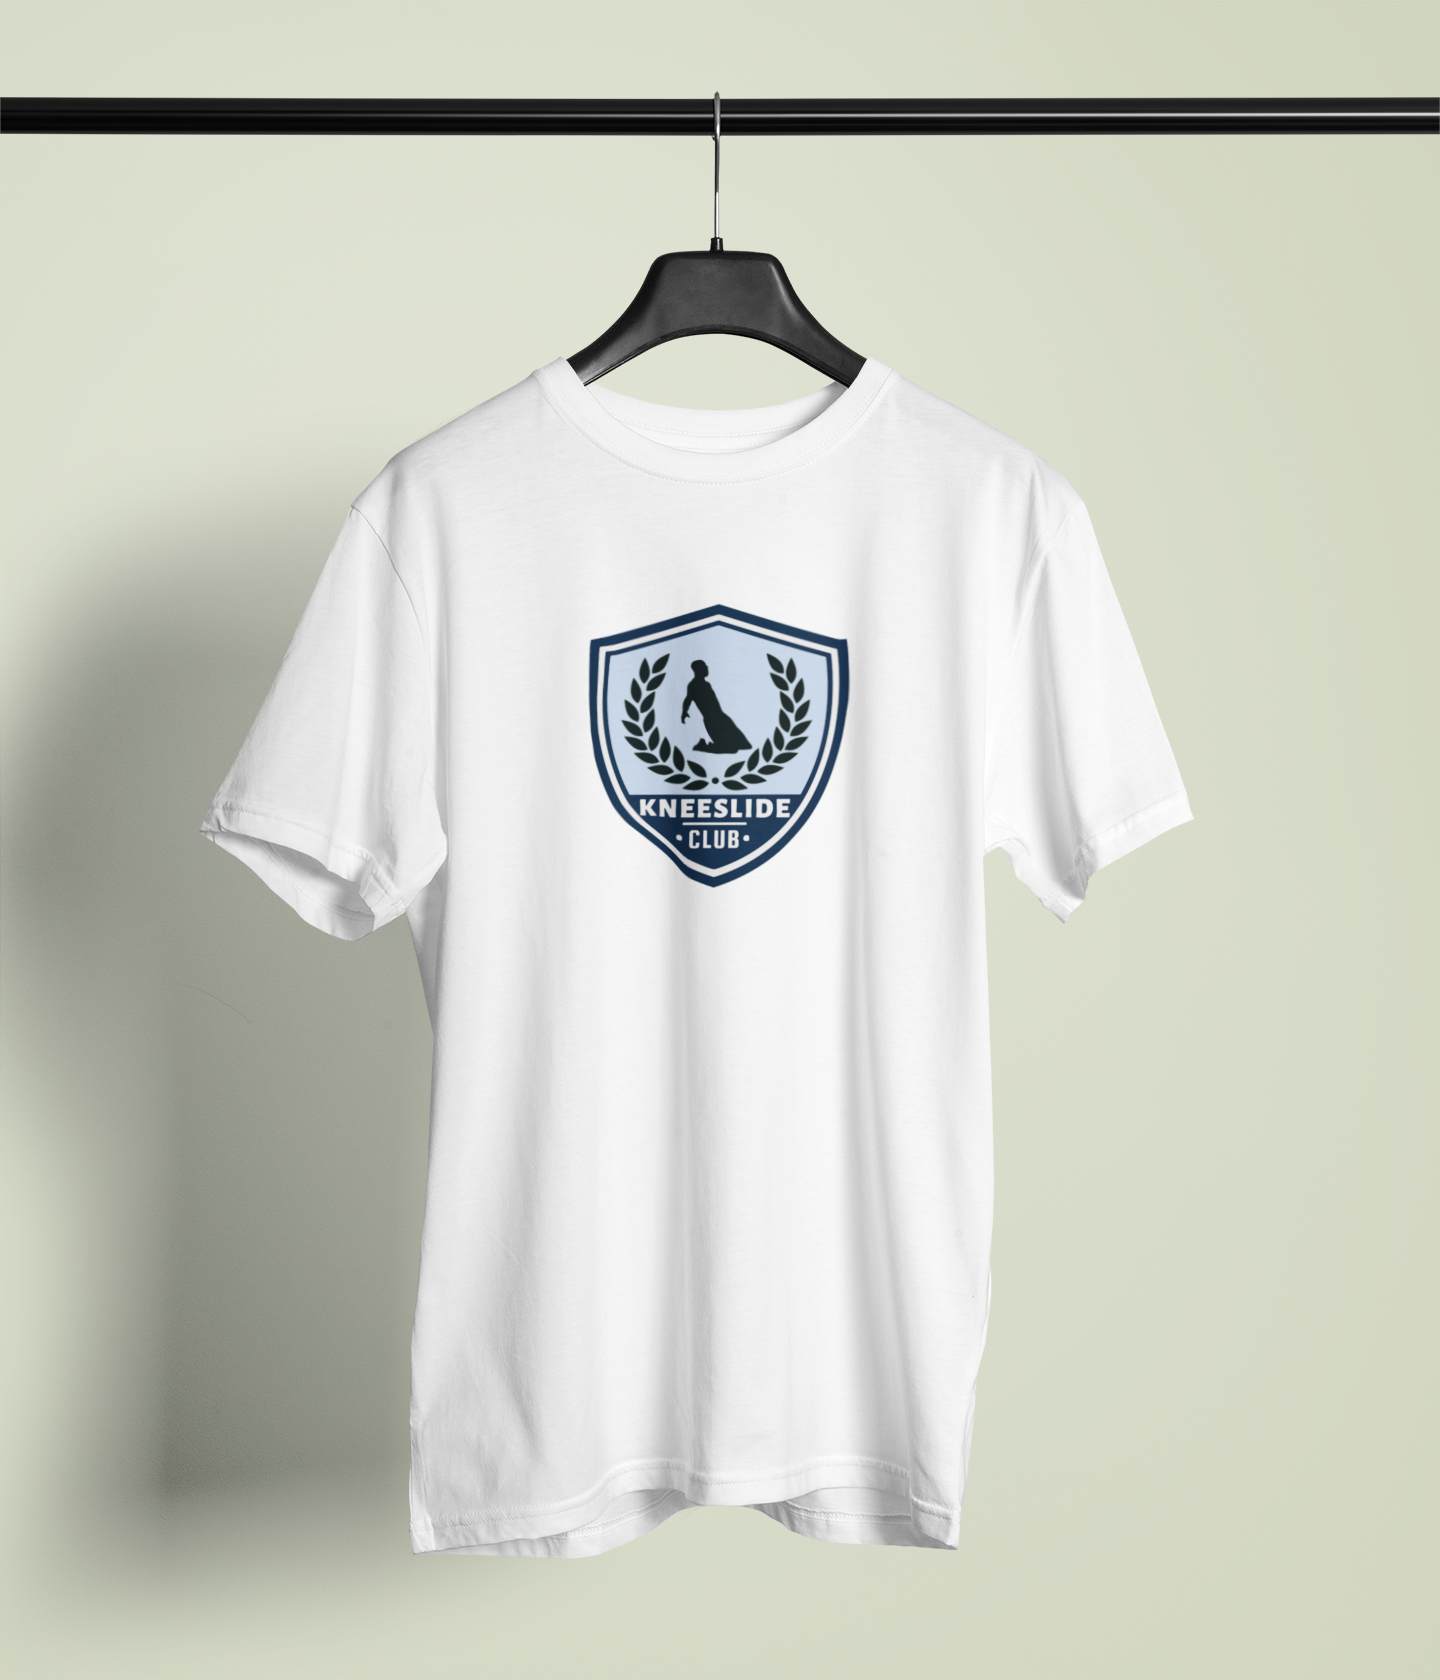 Kneeslide Club crest T-shirt